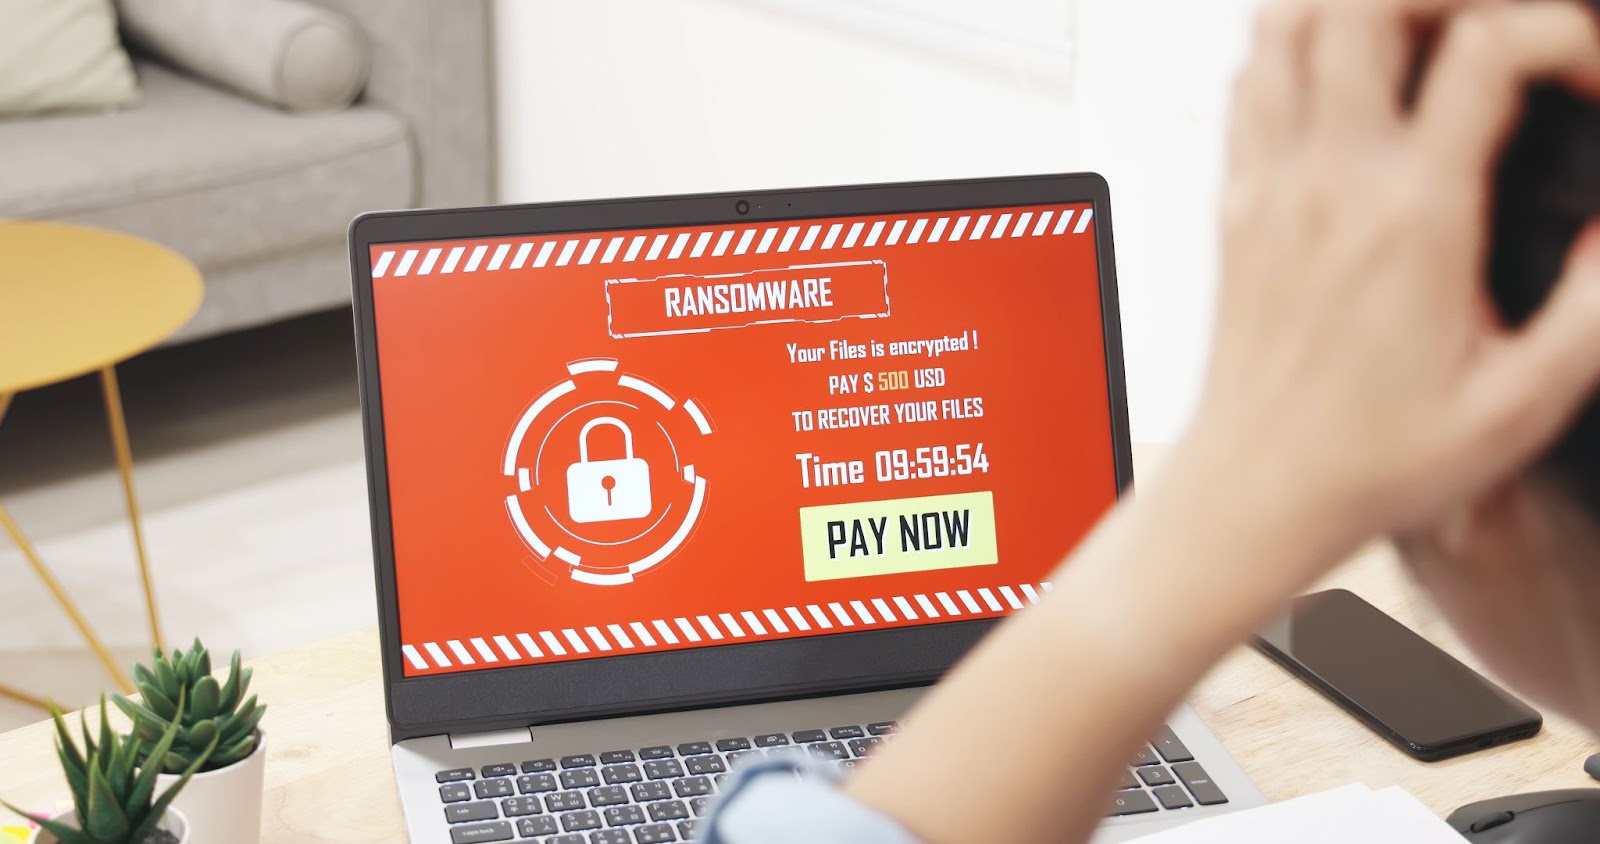 Computer screen showing Ransomeware warning message.